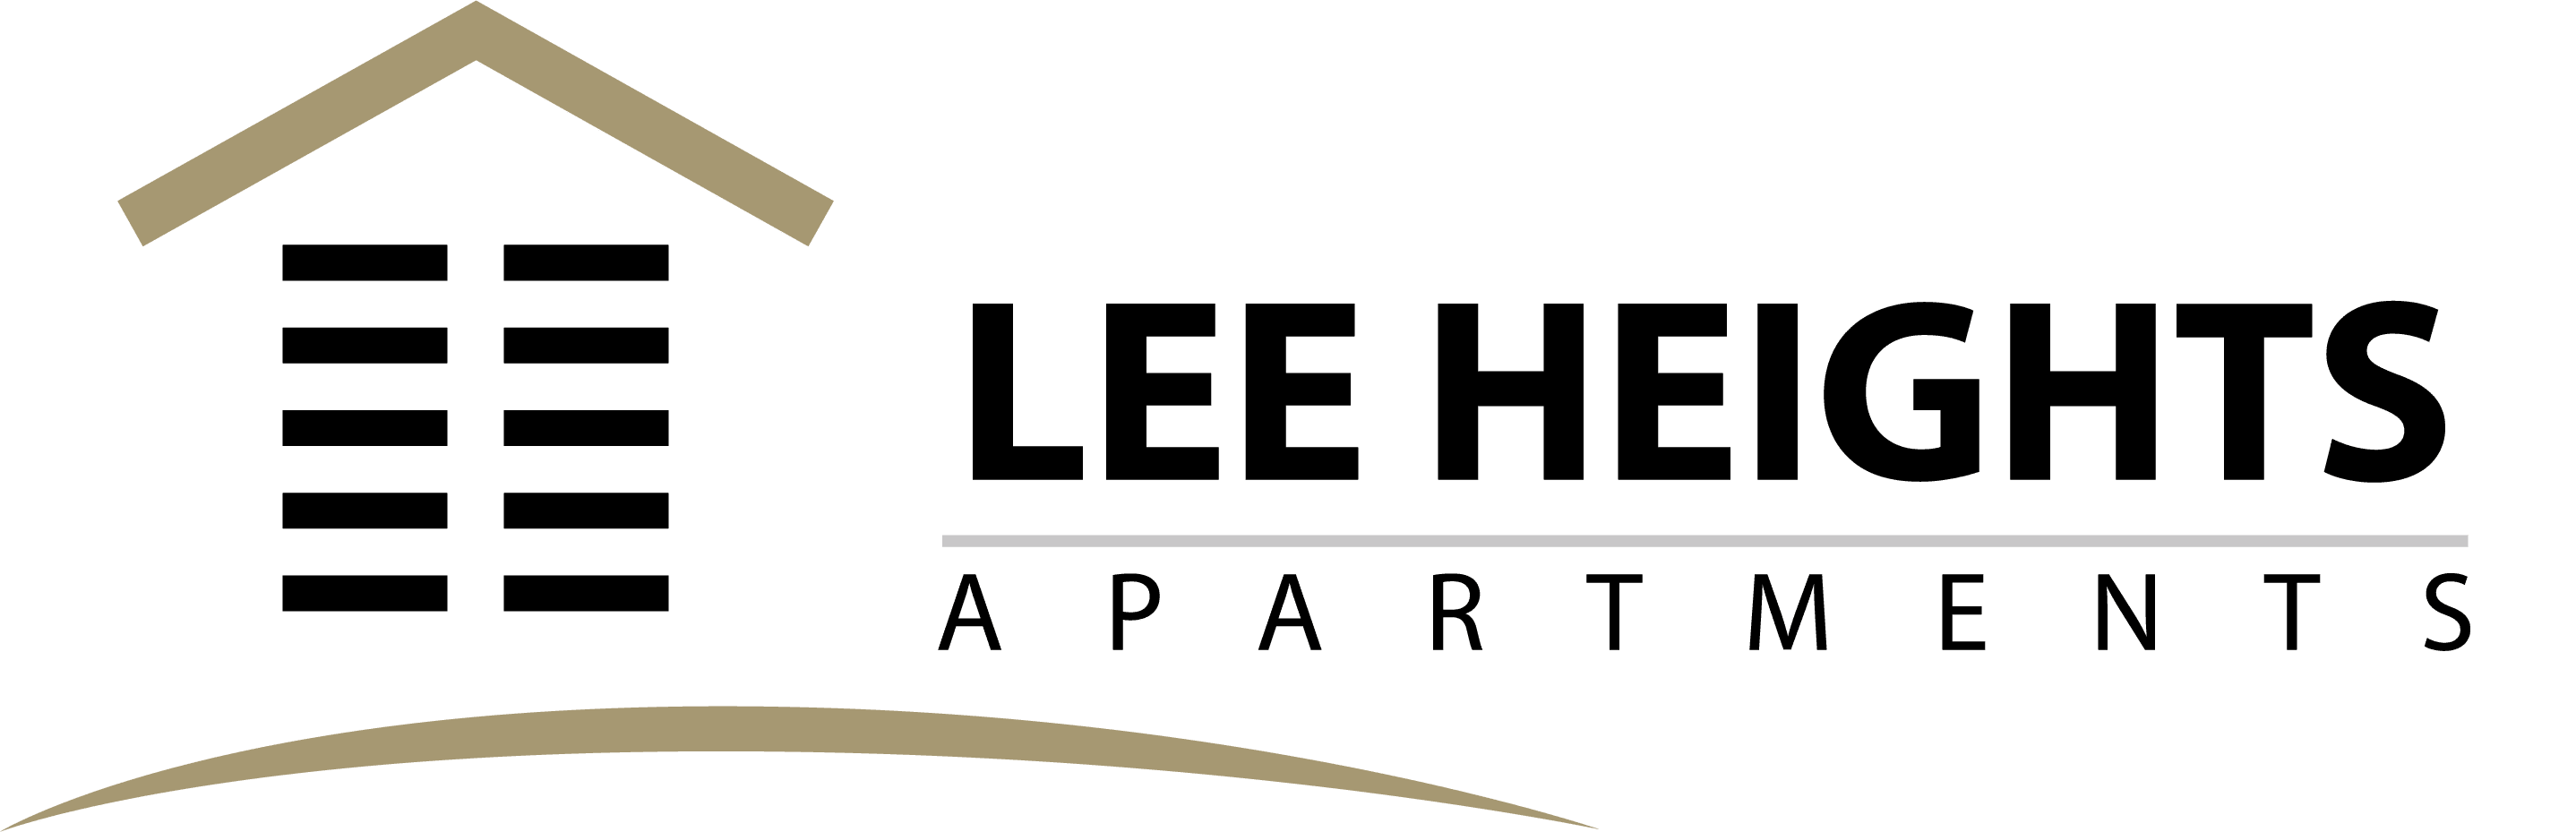 Lee Heights Apartments | Apartments in Arlington, VA